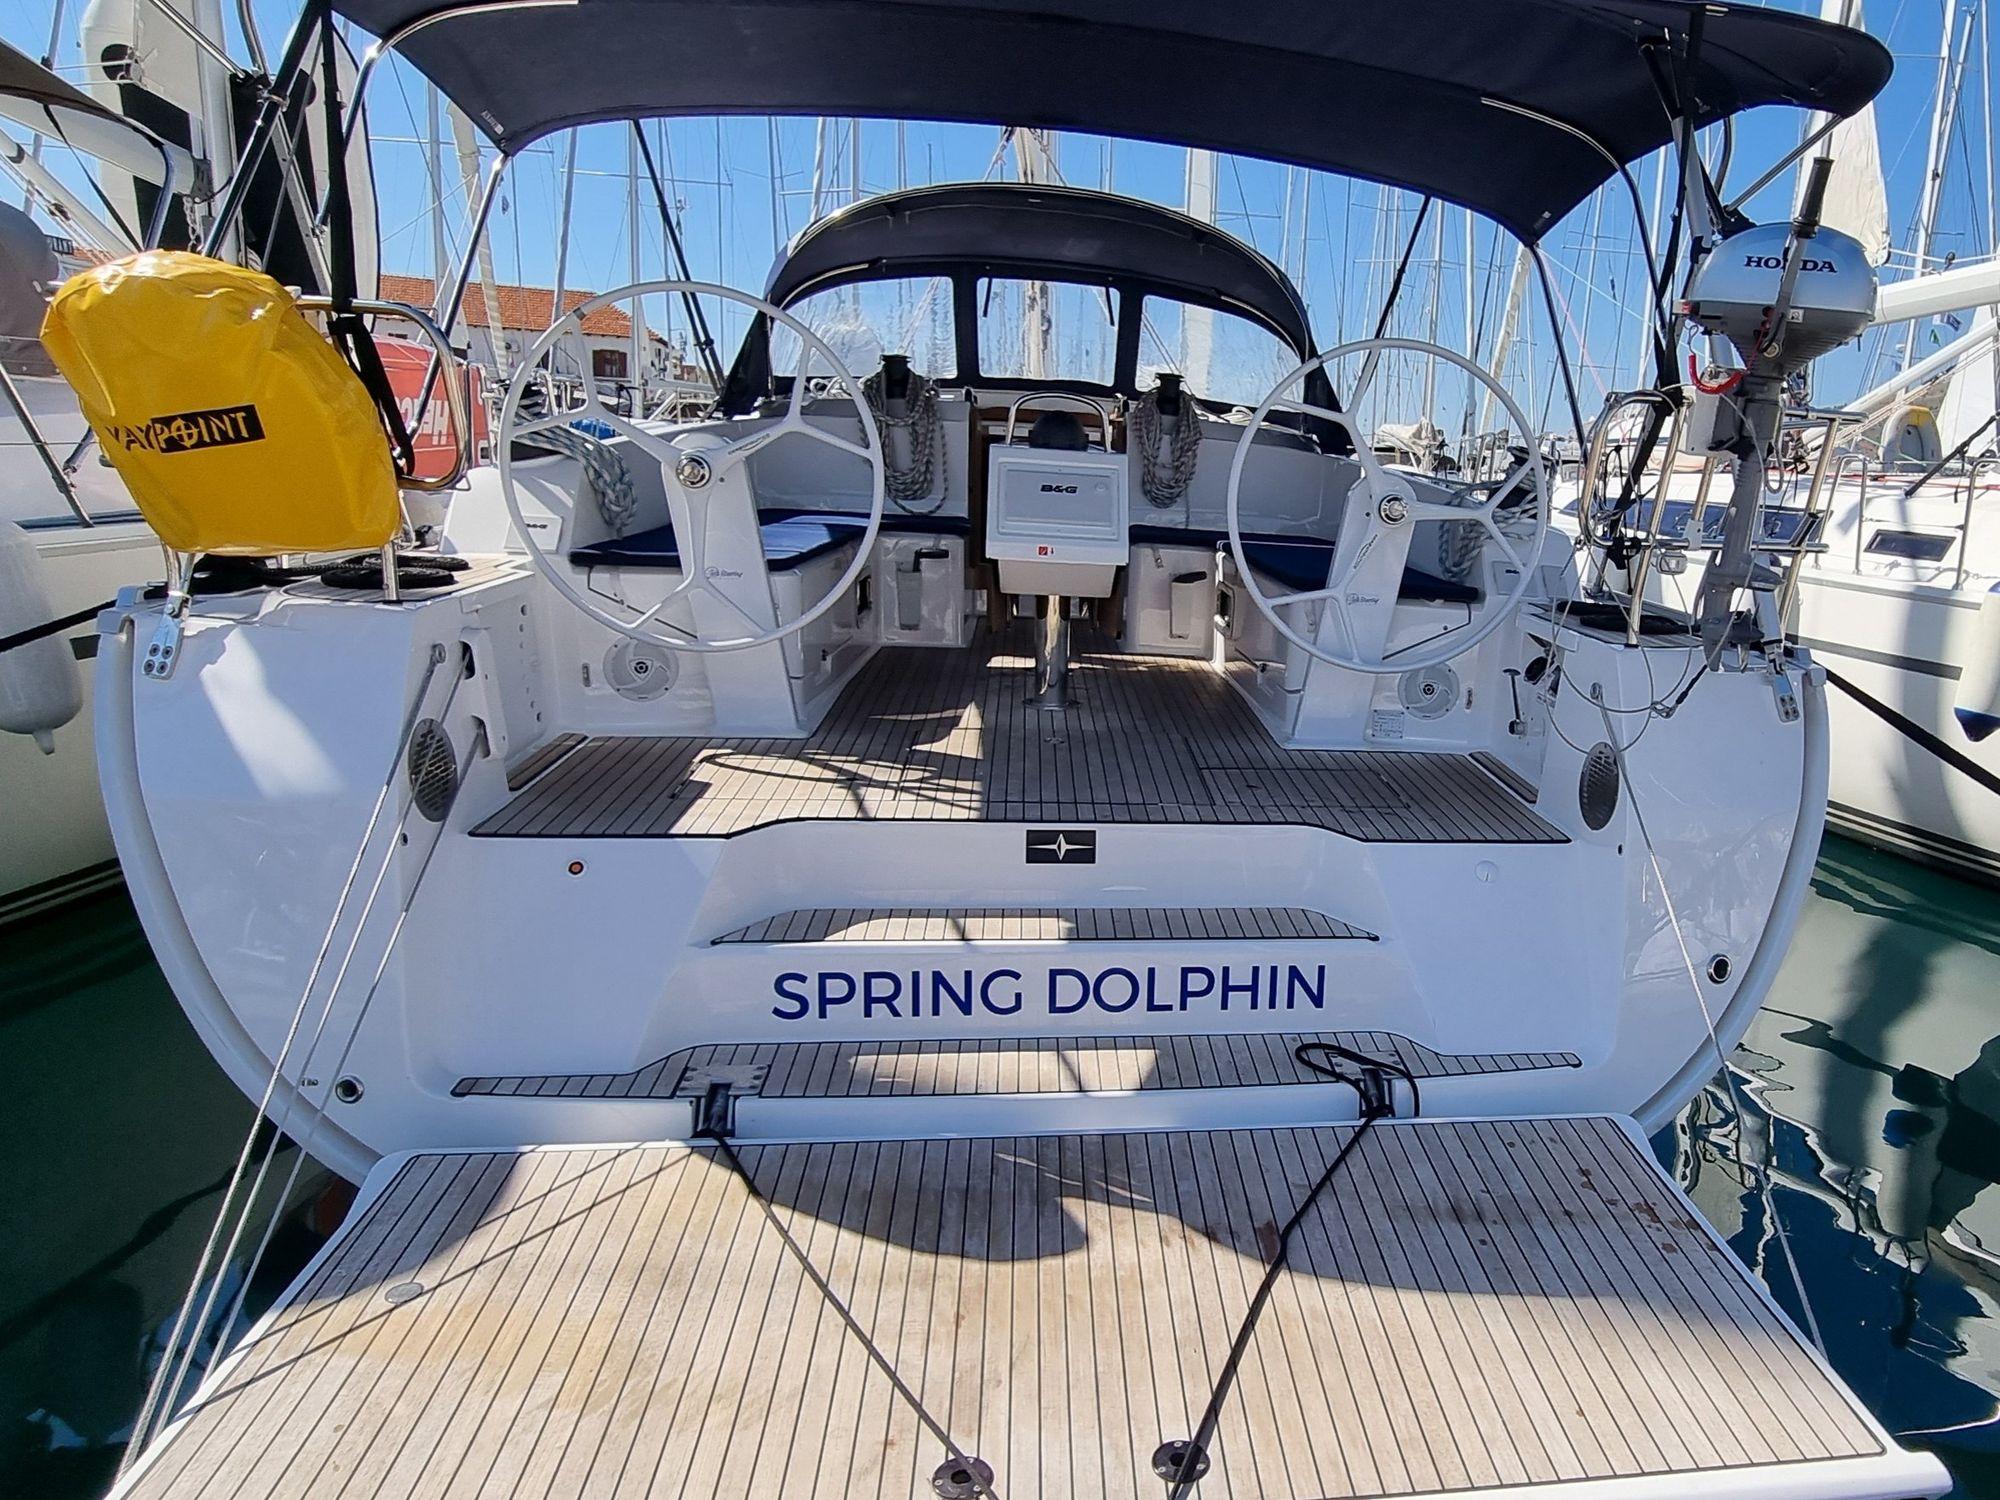 Spring Dolphin